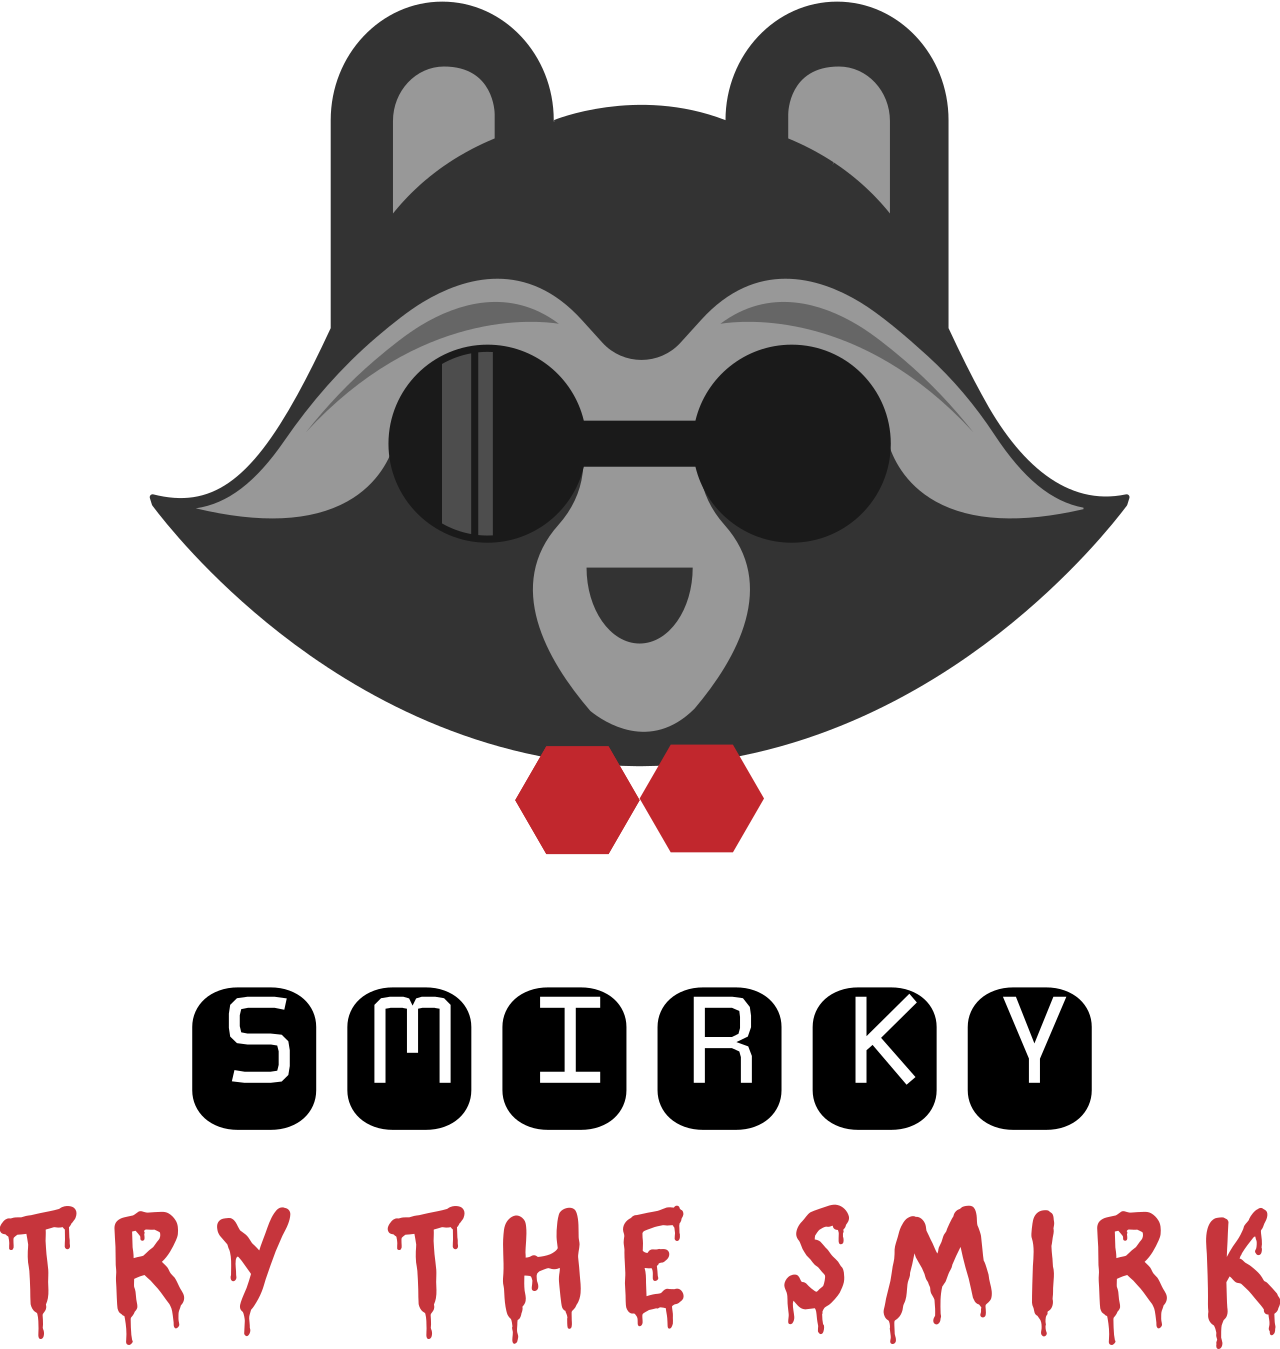 Smirky's logo